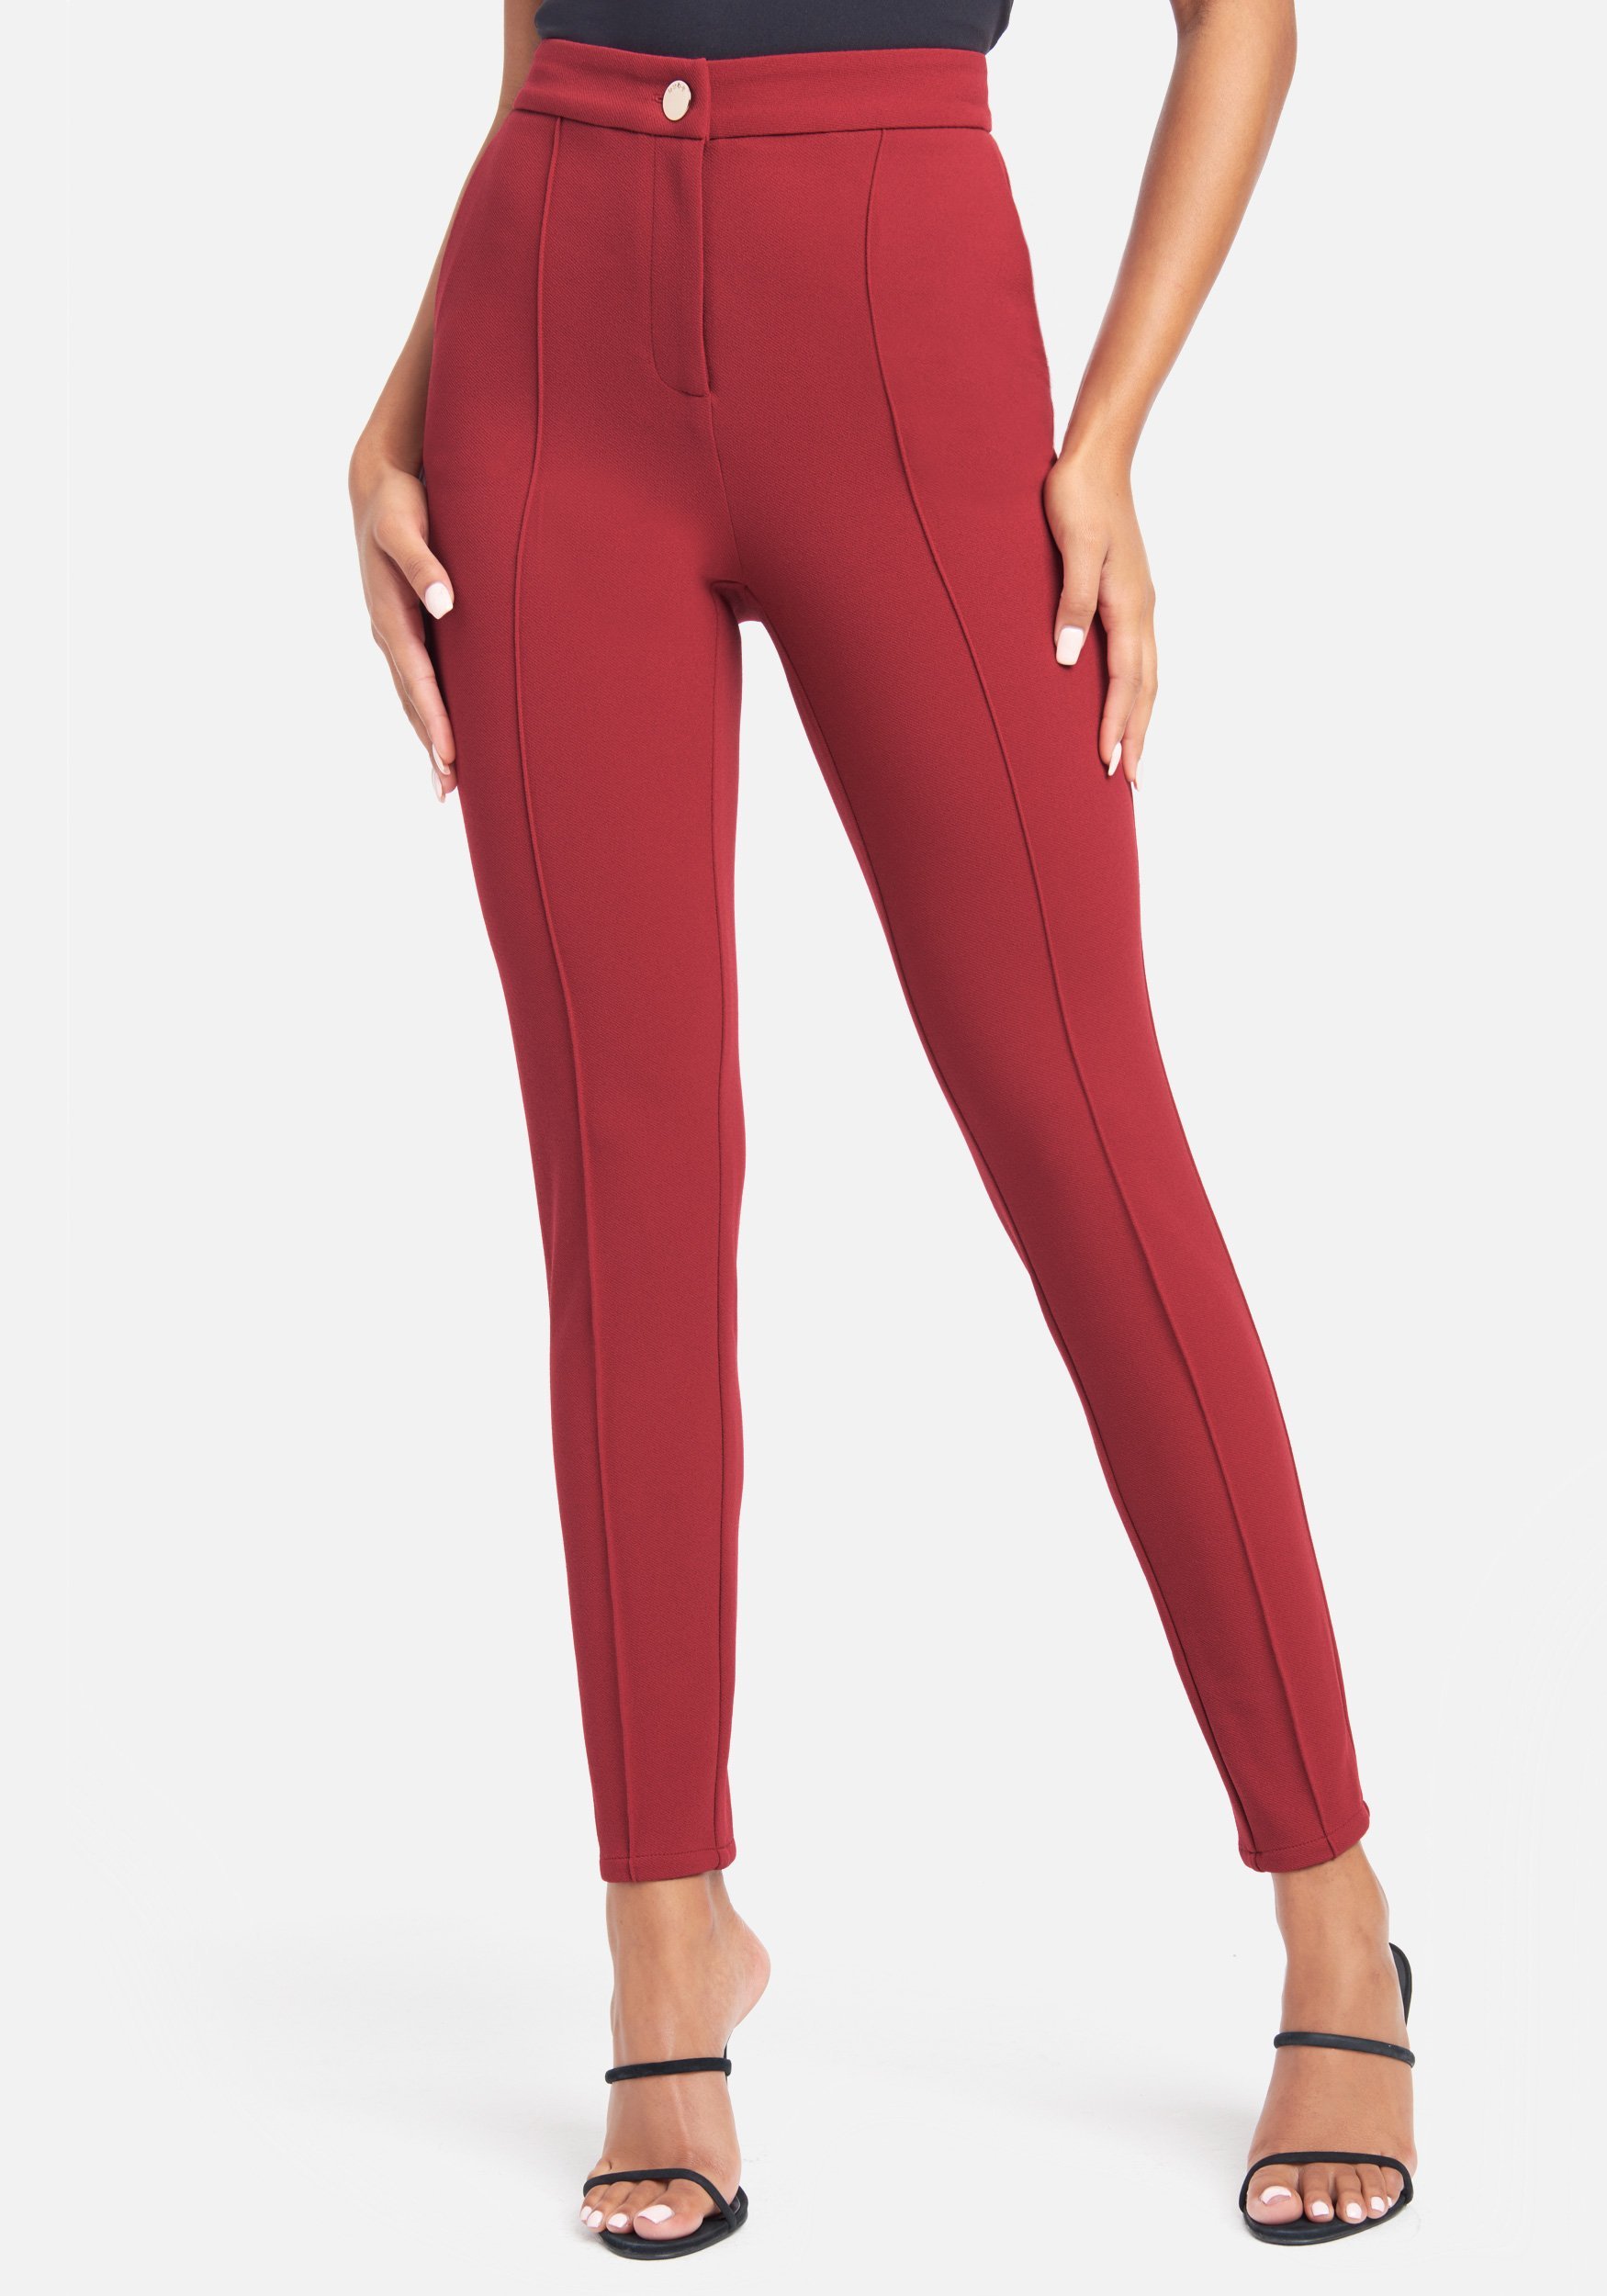 Bebe Women's Scuba Twill Skinny Pant, Size Medium in Rio Red Spandex